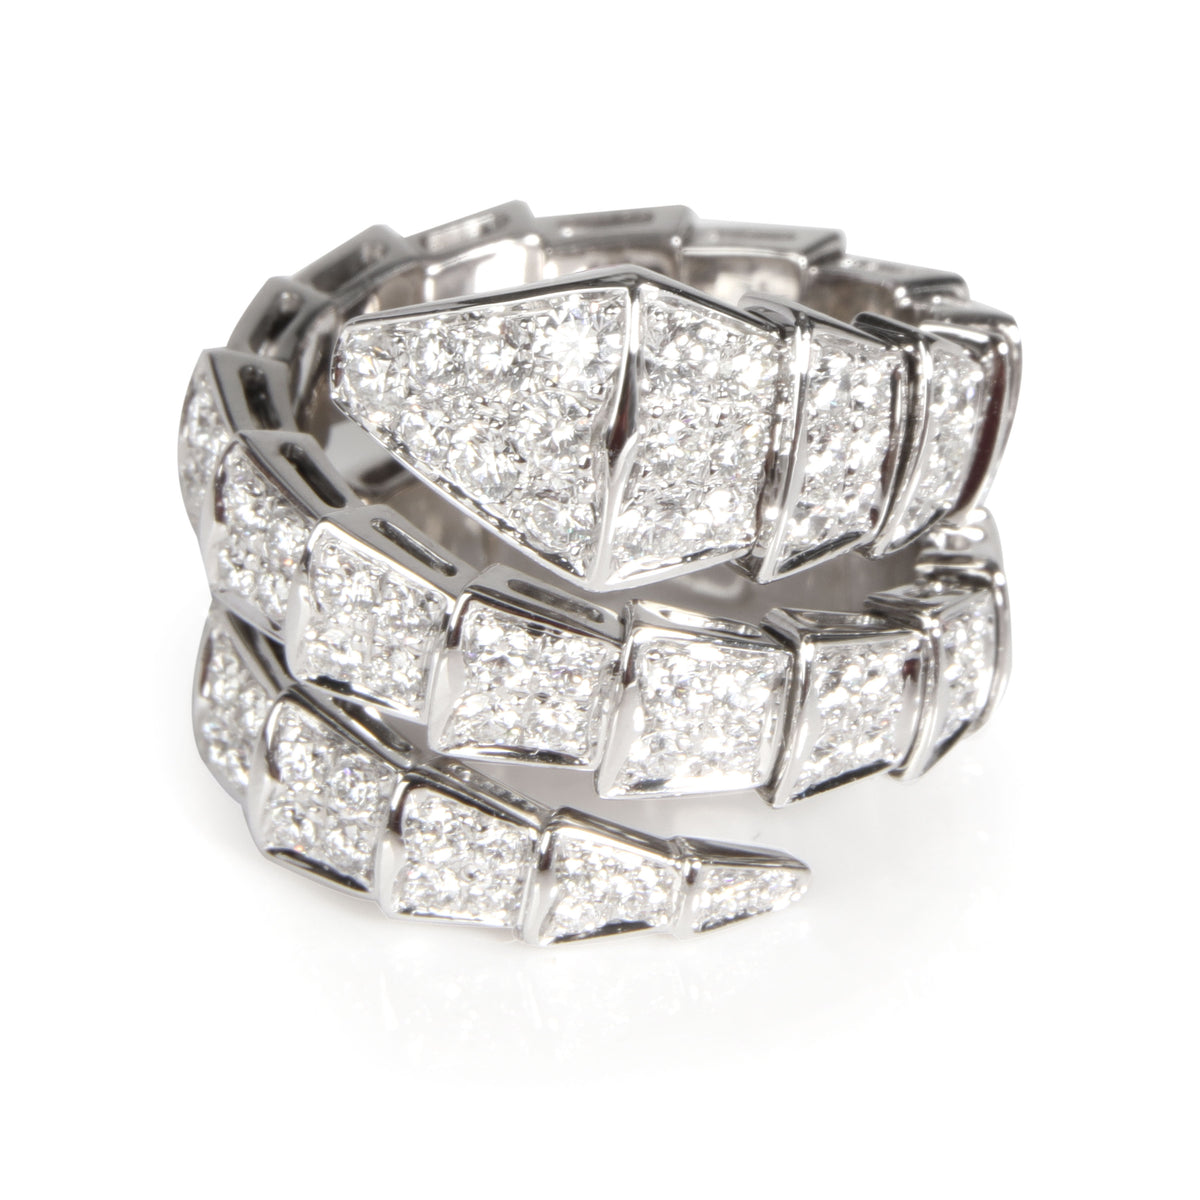 BVLGARI Serpenti Diamond Ring in 18K White Gold 2.77 CTW